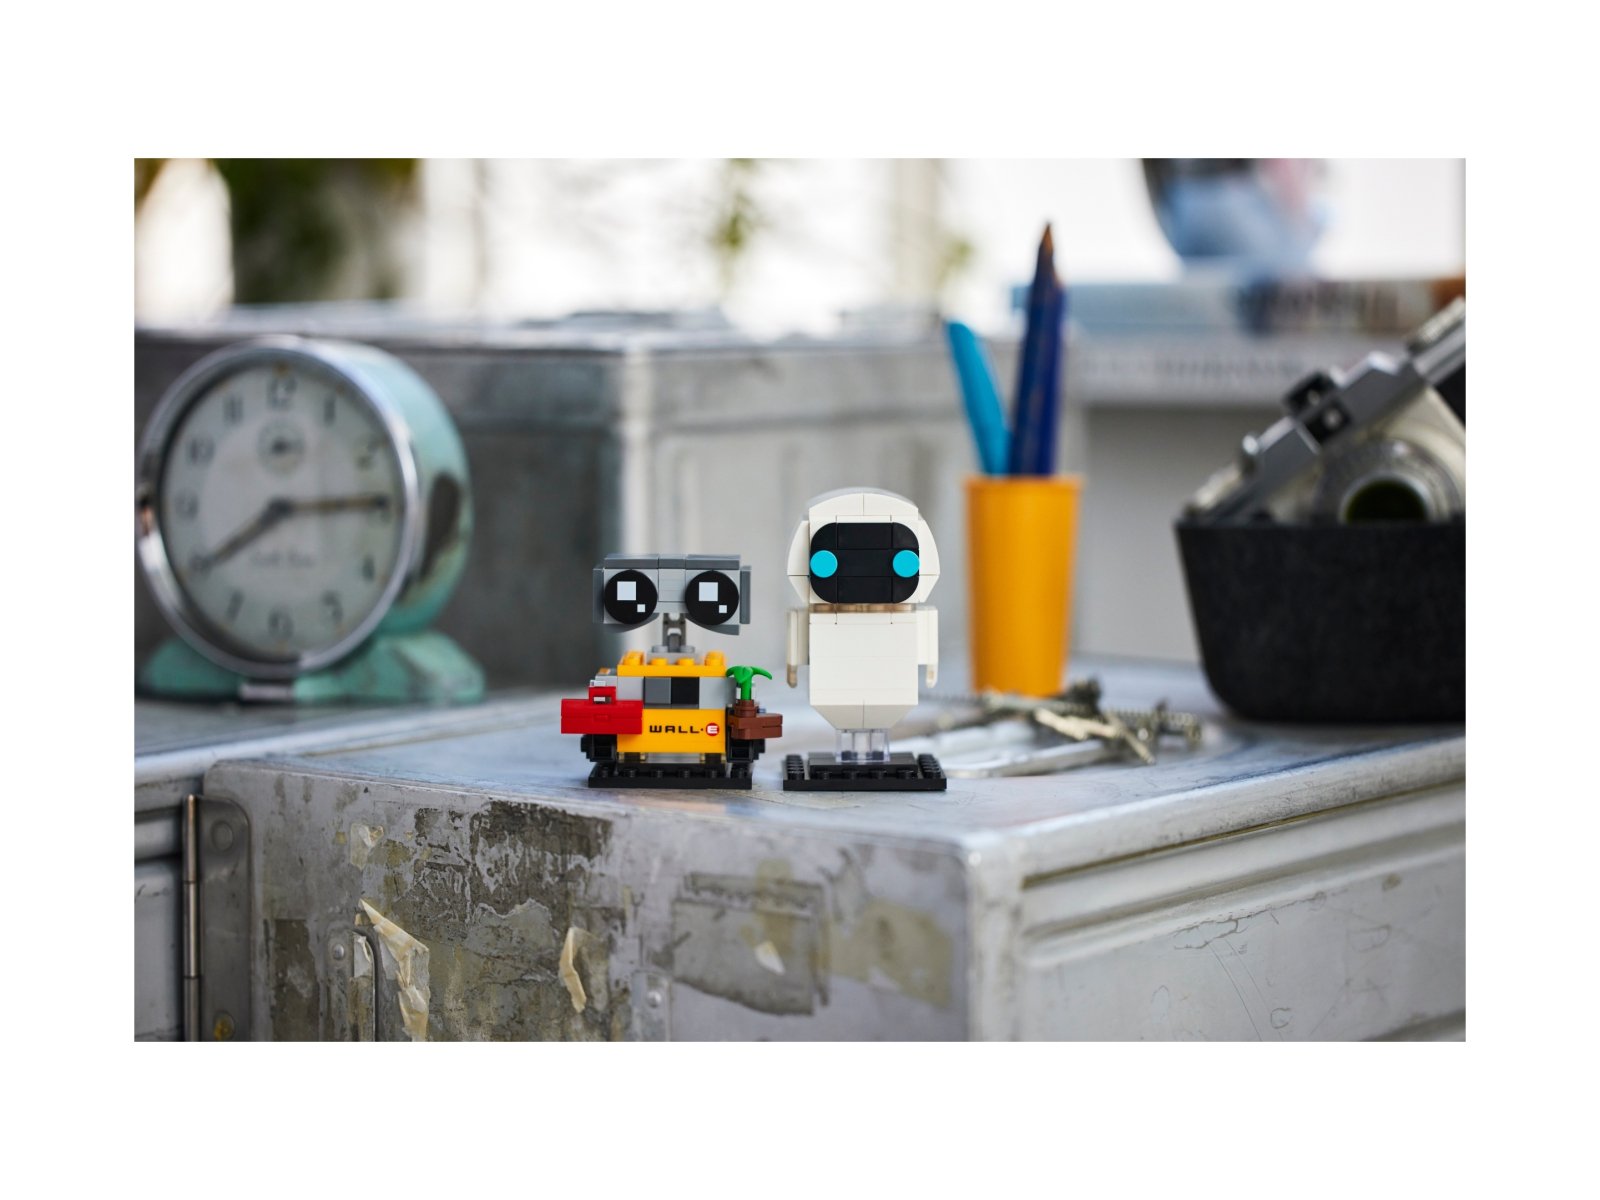 LEGO BrickHeadz 40619 EWA i WALL-E